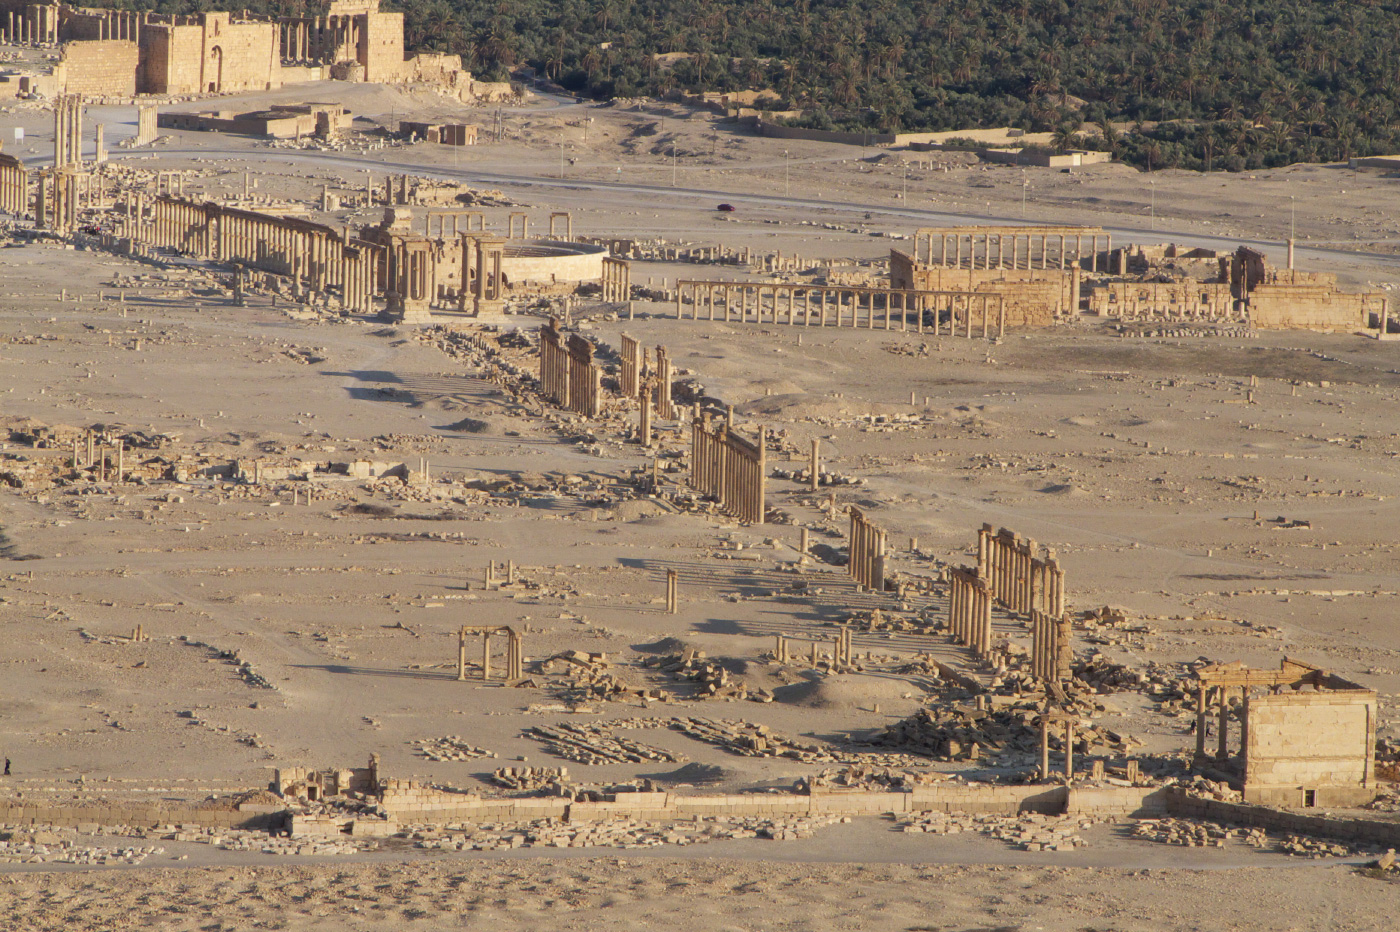 Monumental ruins show the city of Palmyra